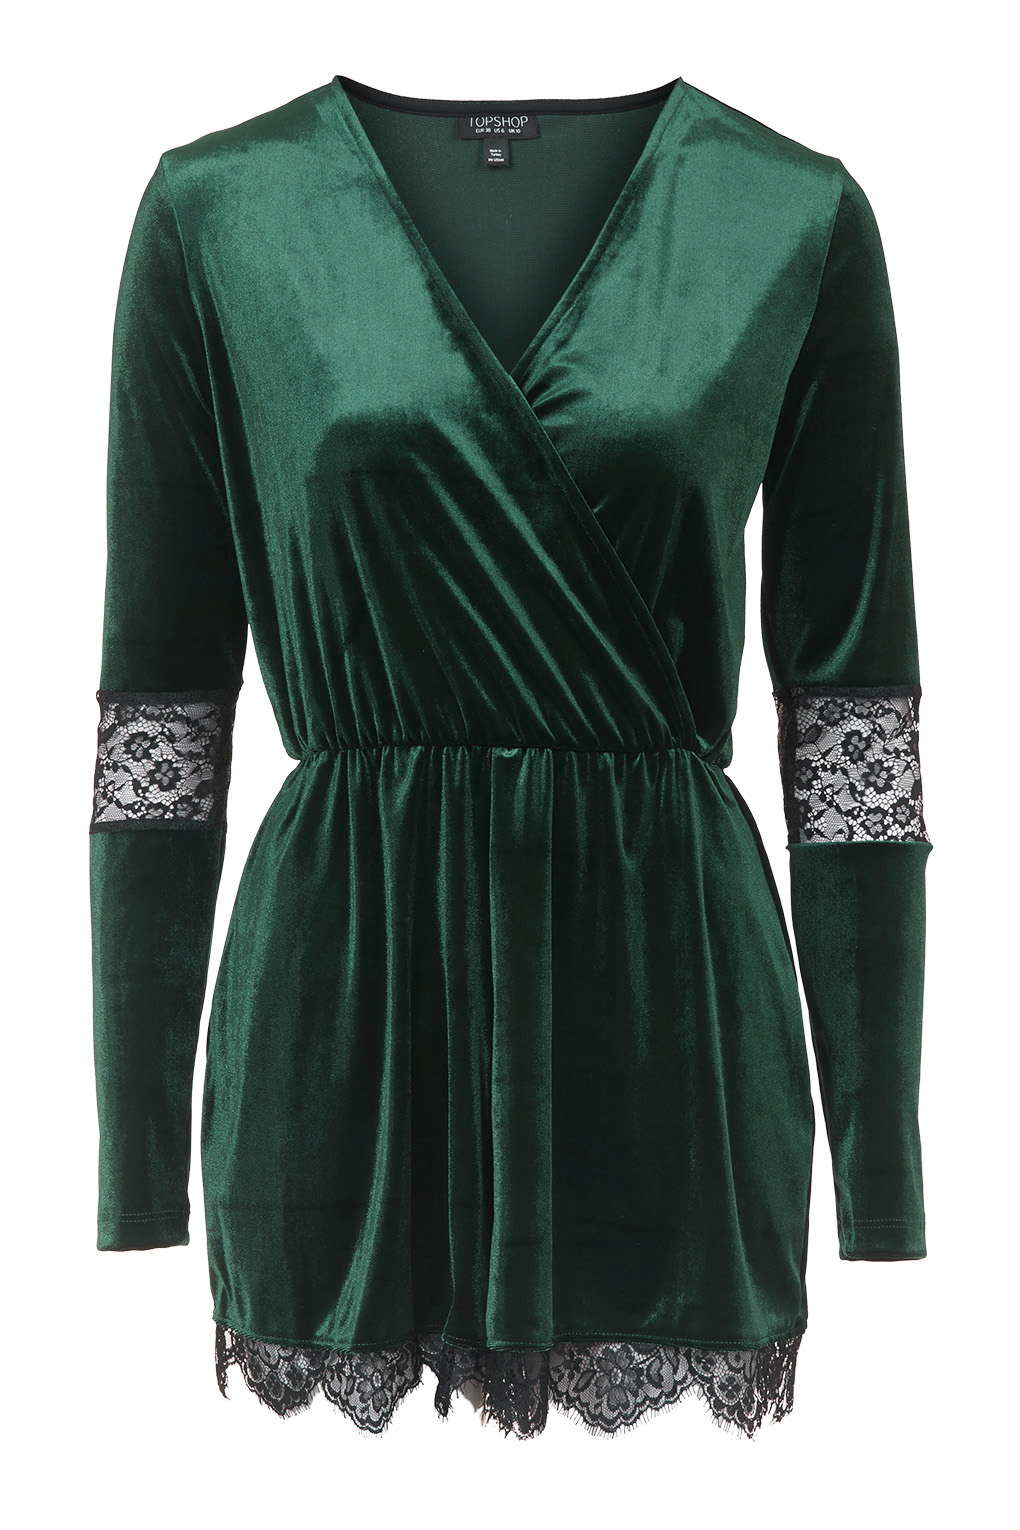 TOPSHOP Velvet Lace Playsuit in Dark Green (Green) - Lyst